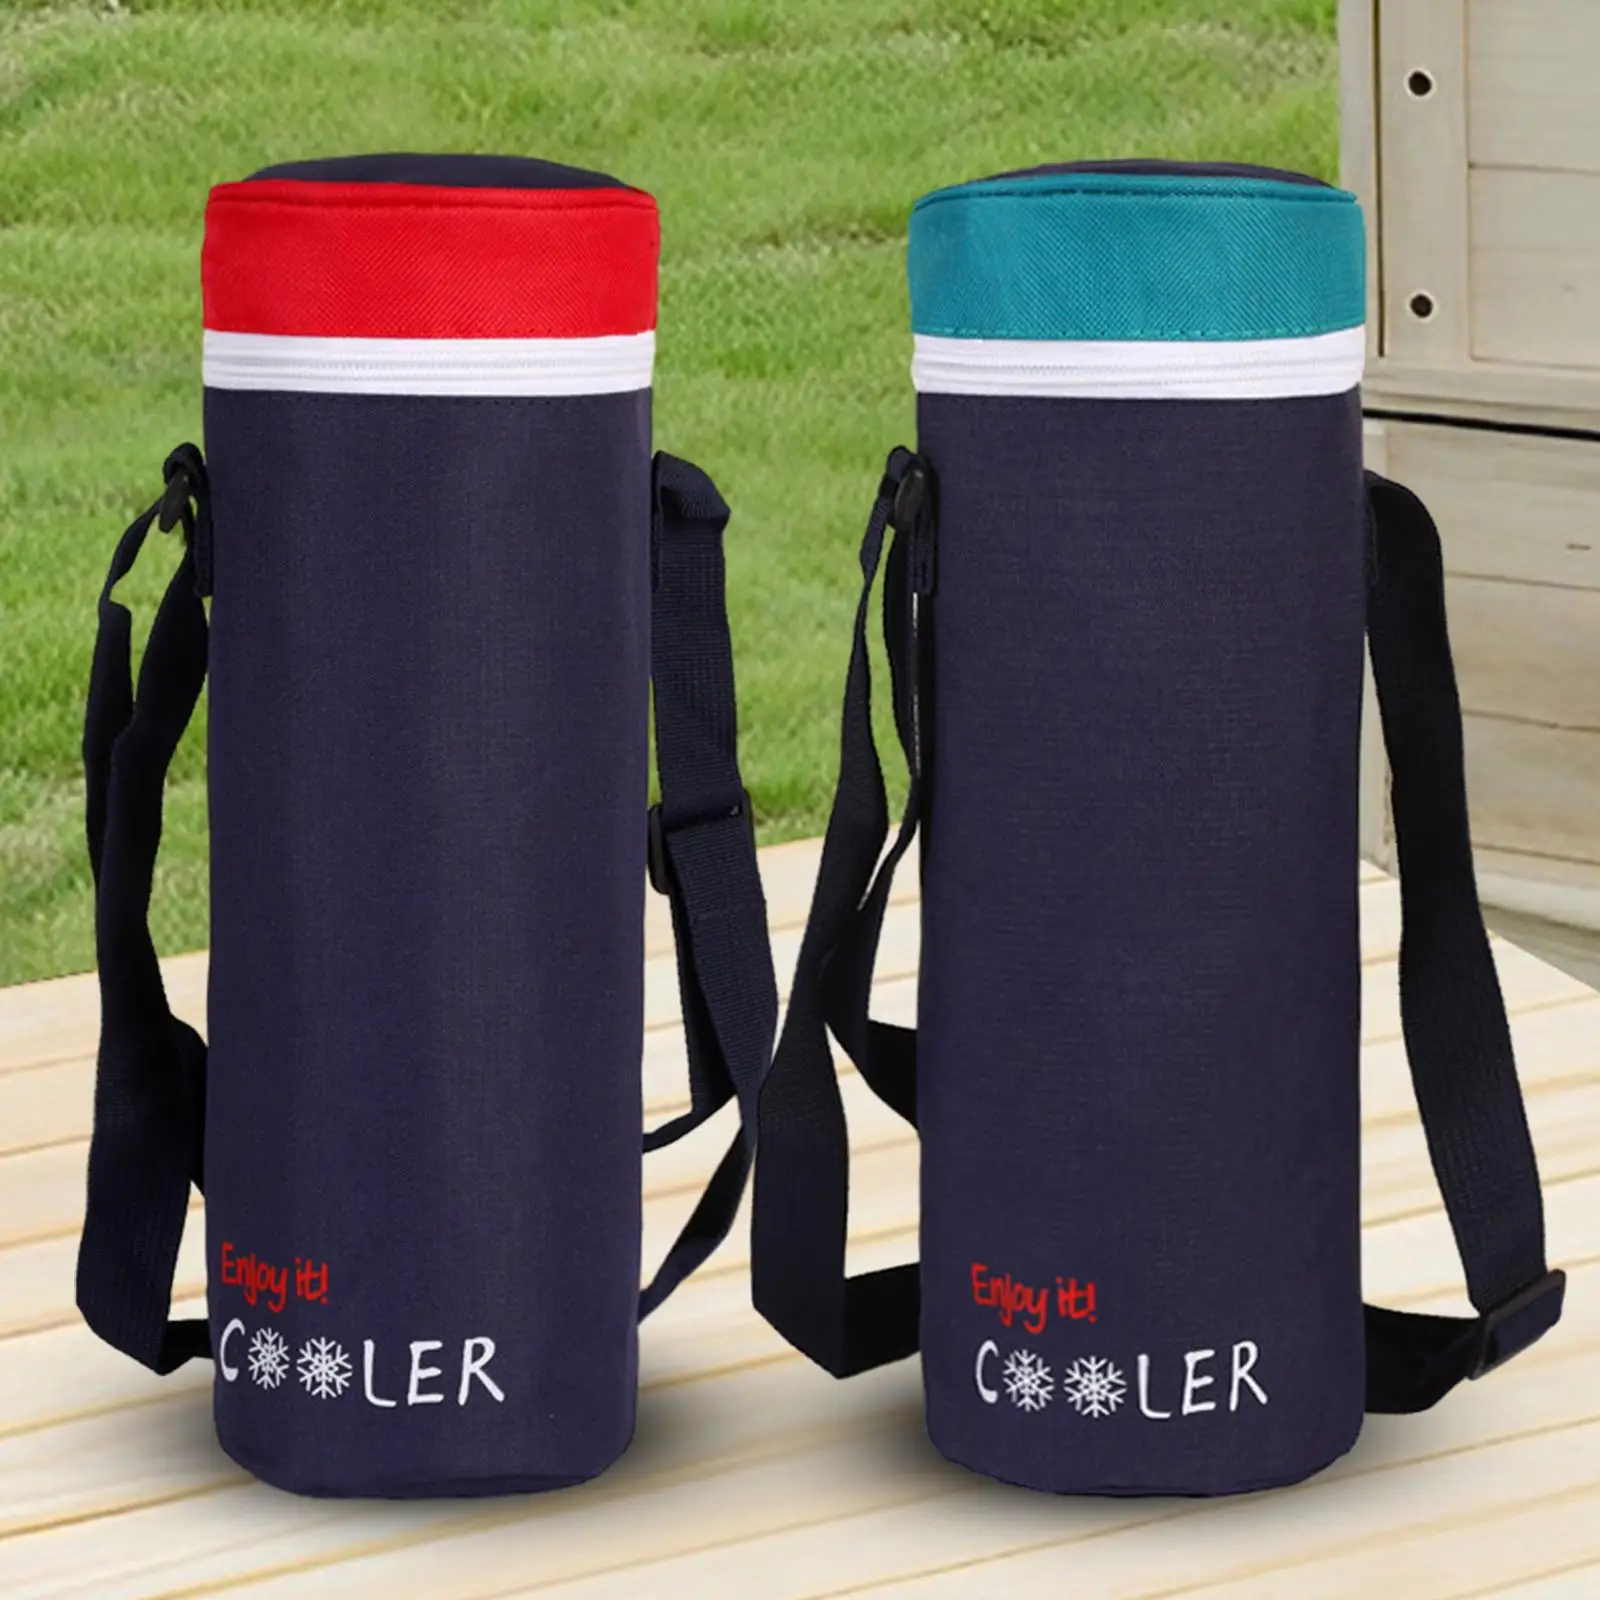 Insulated Water Bottle Bag Carrier with Adjustable Shoulder Strap Cooler Bag Bottle Holder Case for Beach Day Hiking Camping